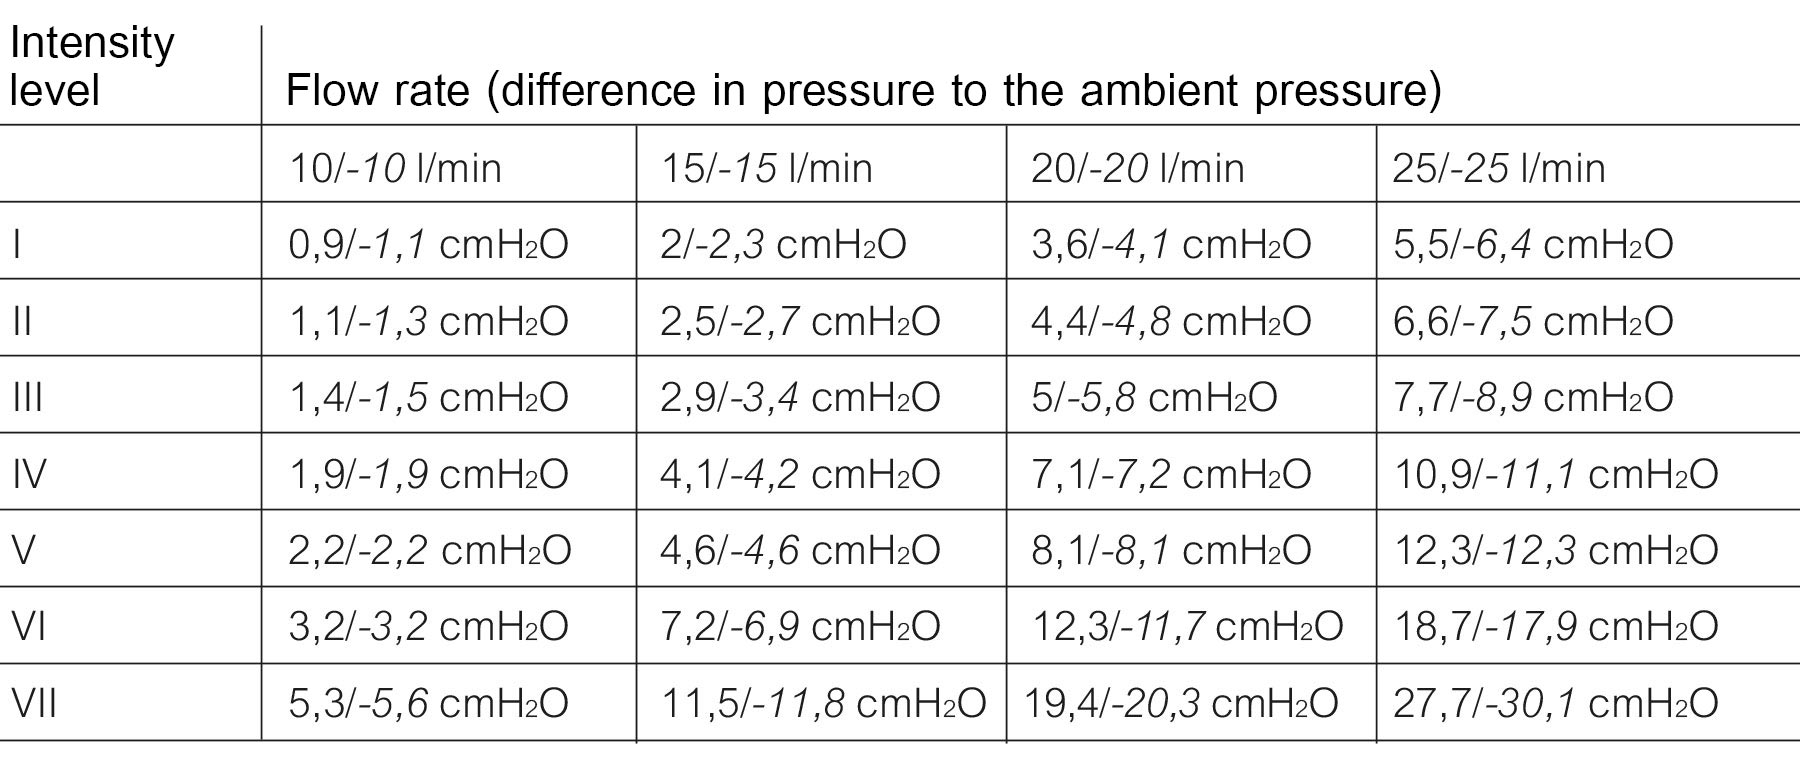 Average pressure during exhalation / inhalation